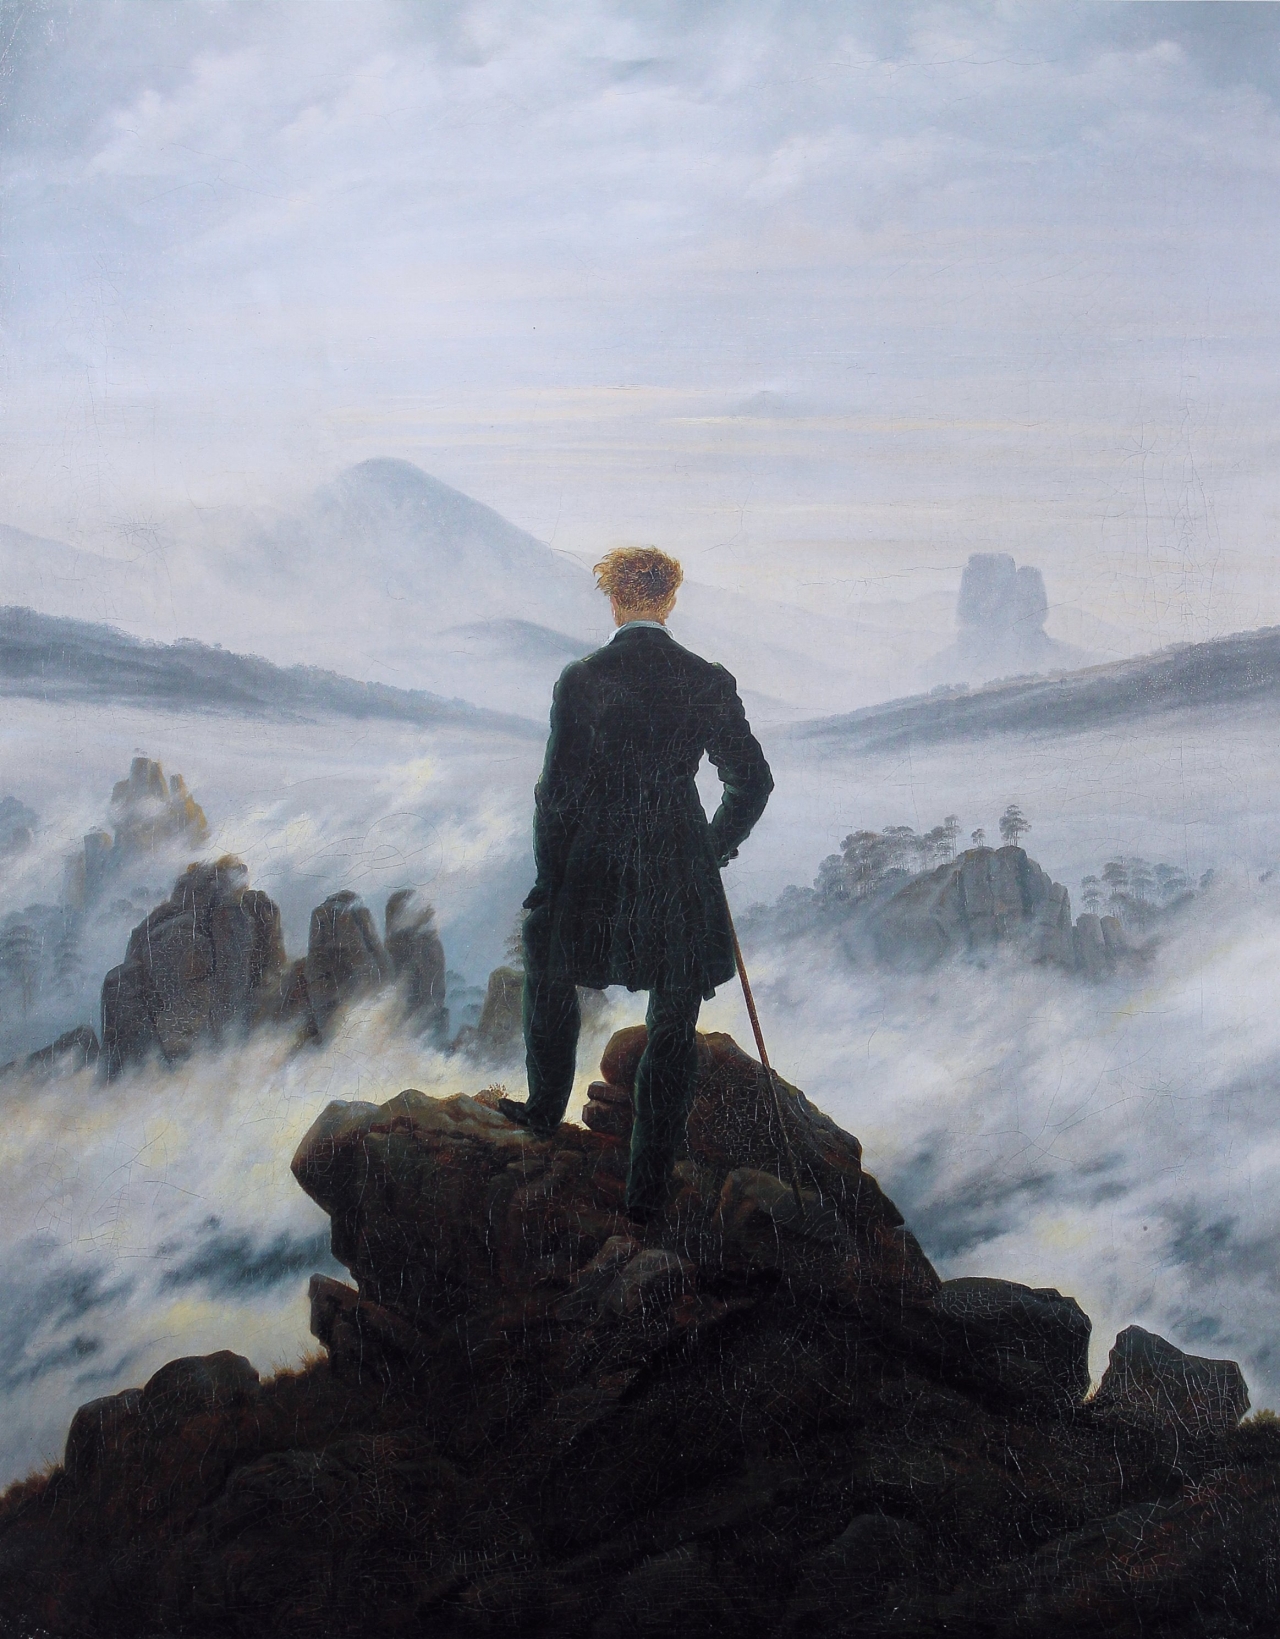 Caspar David Friedrich, 'Wanderer above the Sea of fog', 1818, Oil-on-canvas, 94.8 cm × 74.8 cm, Kunsthalle Hamburg, Hamburg, Germany